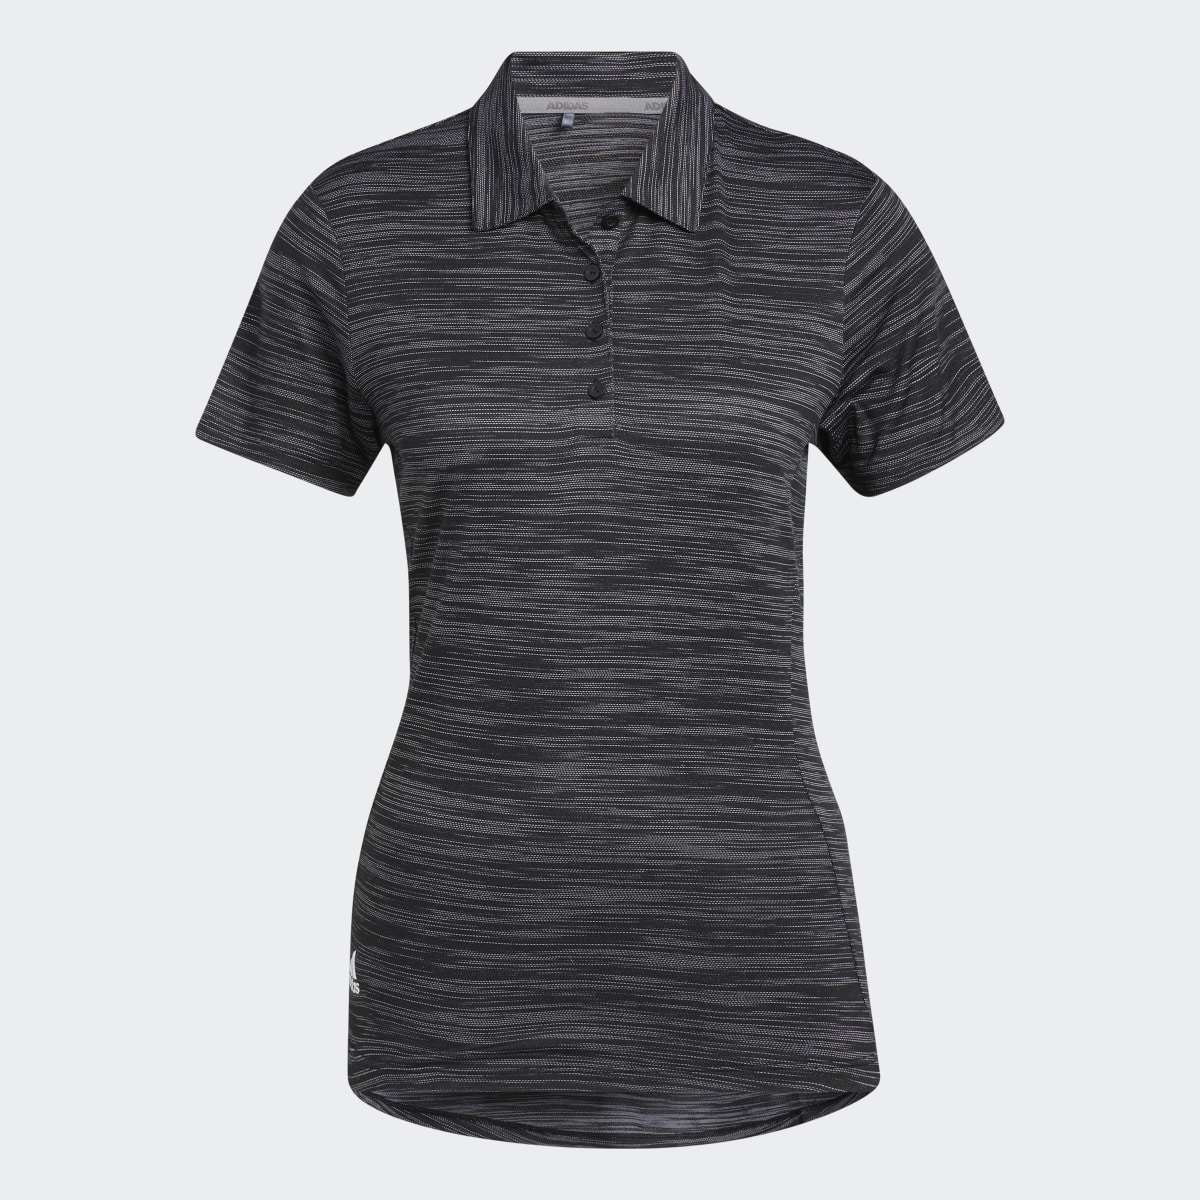 Adidas Space-Dyed Short Sleeve Golf Polo Shirt. 5